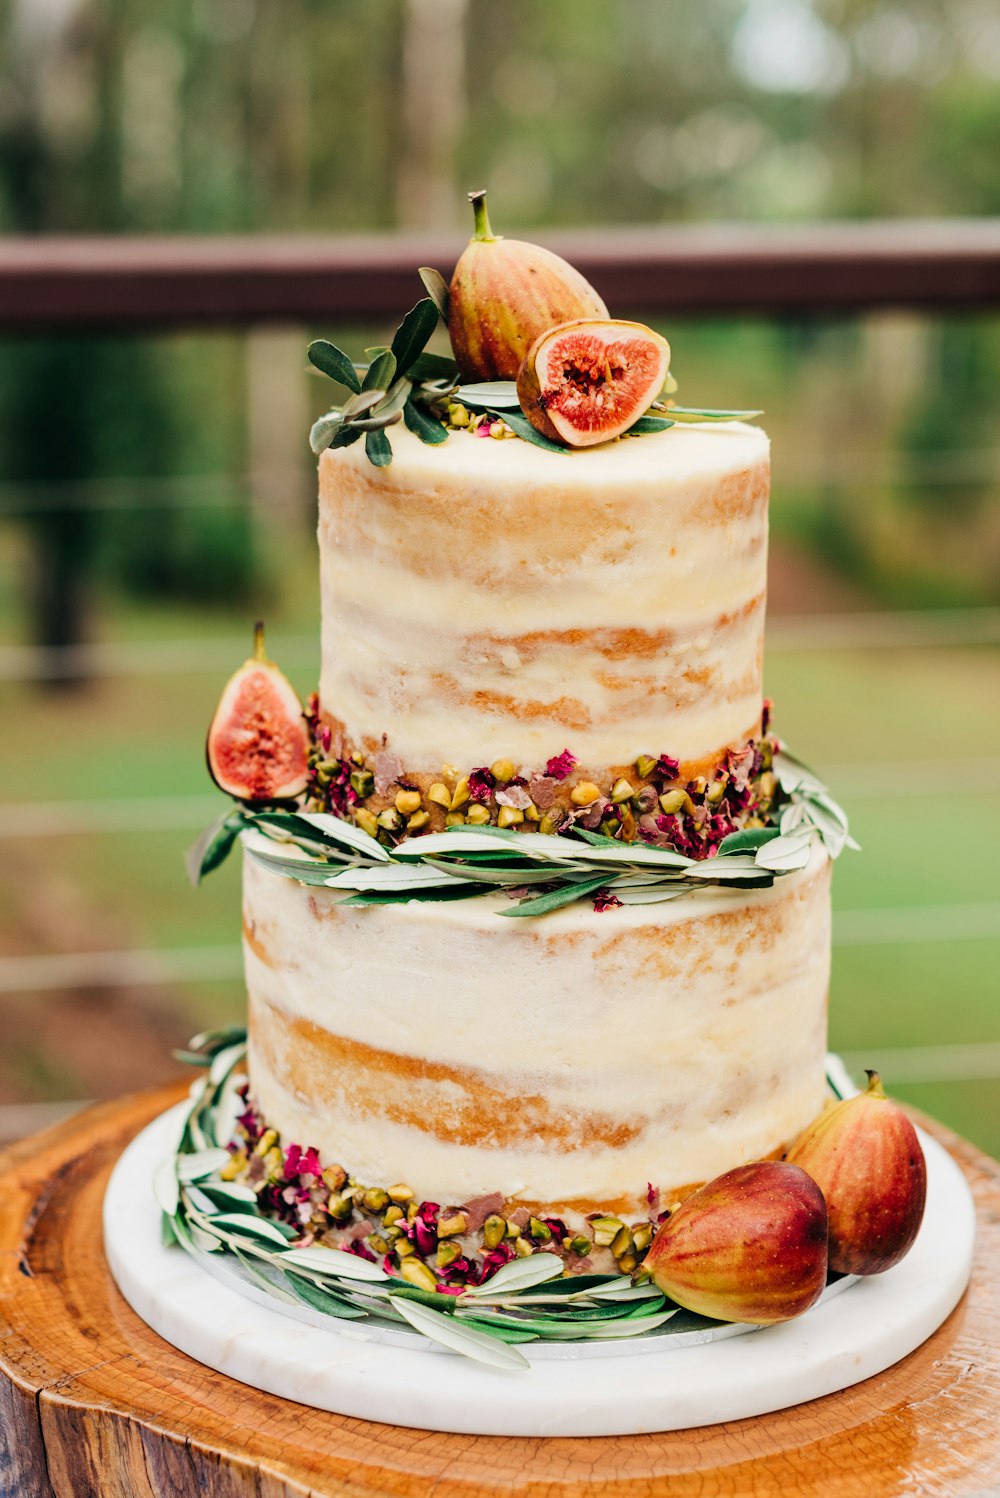 100+ Wedding Cake Pictures | Download Free Images on Unsplash